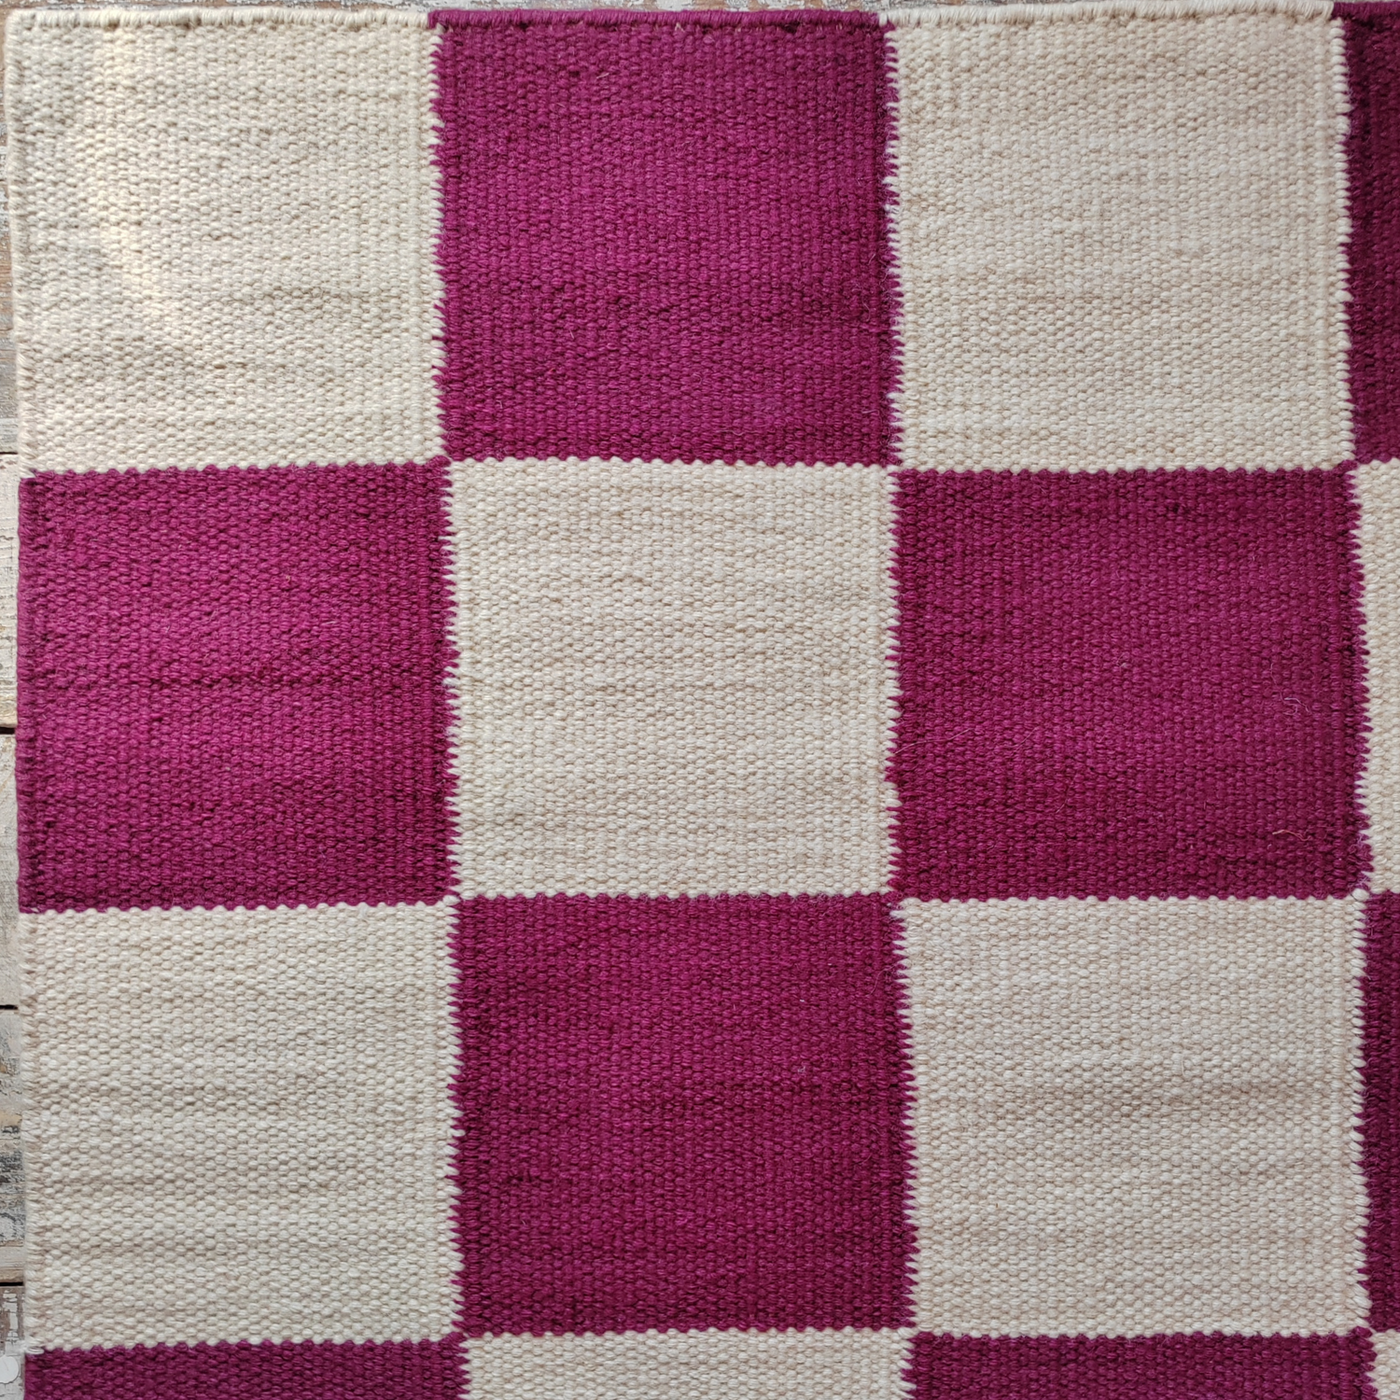 Chequerboard Flatweave Rug - Damson & Off-White - 1.2 x 1.8m